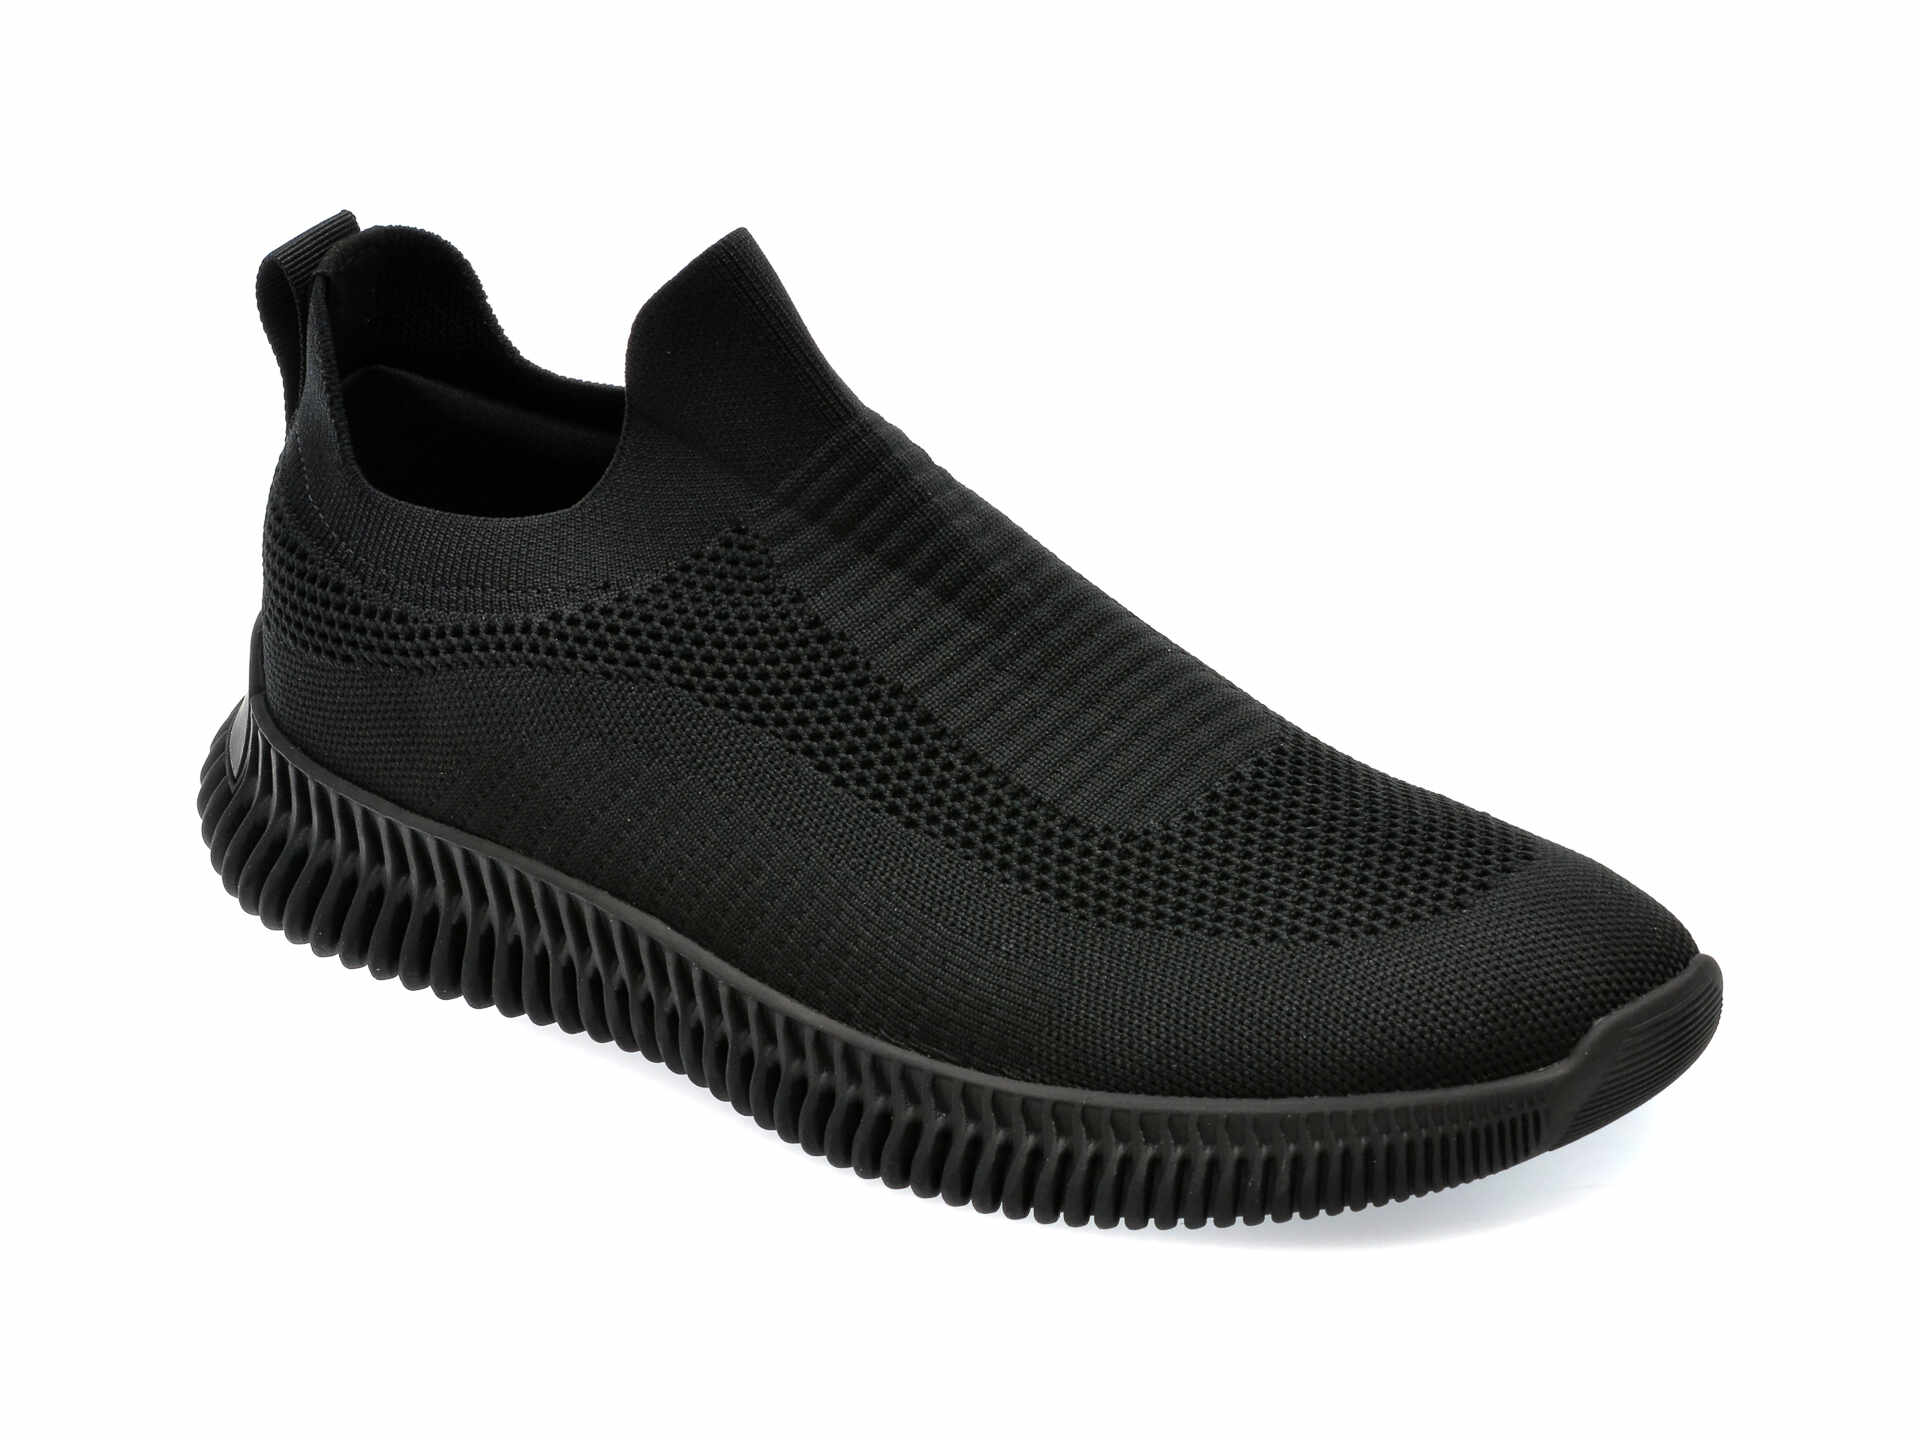 Pantofi sport ALDO negri, AKAI001, din material textil